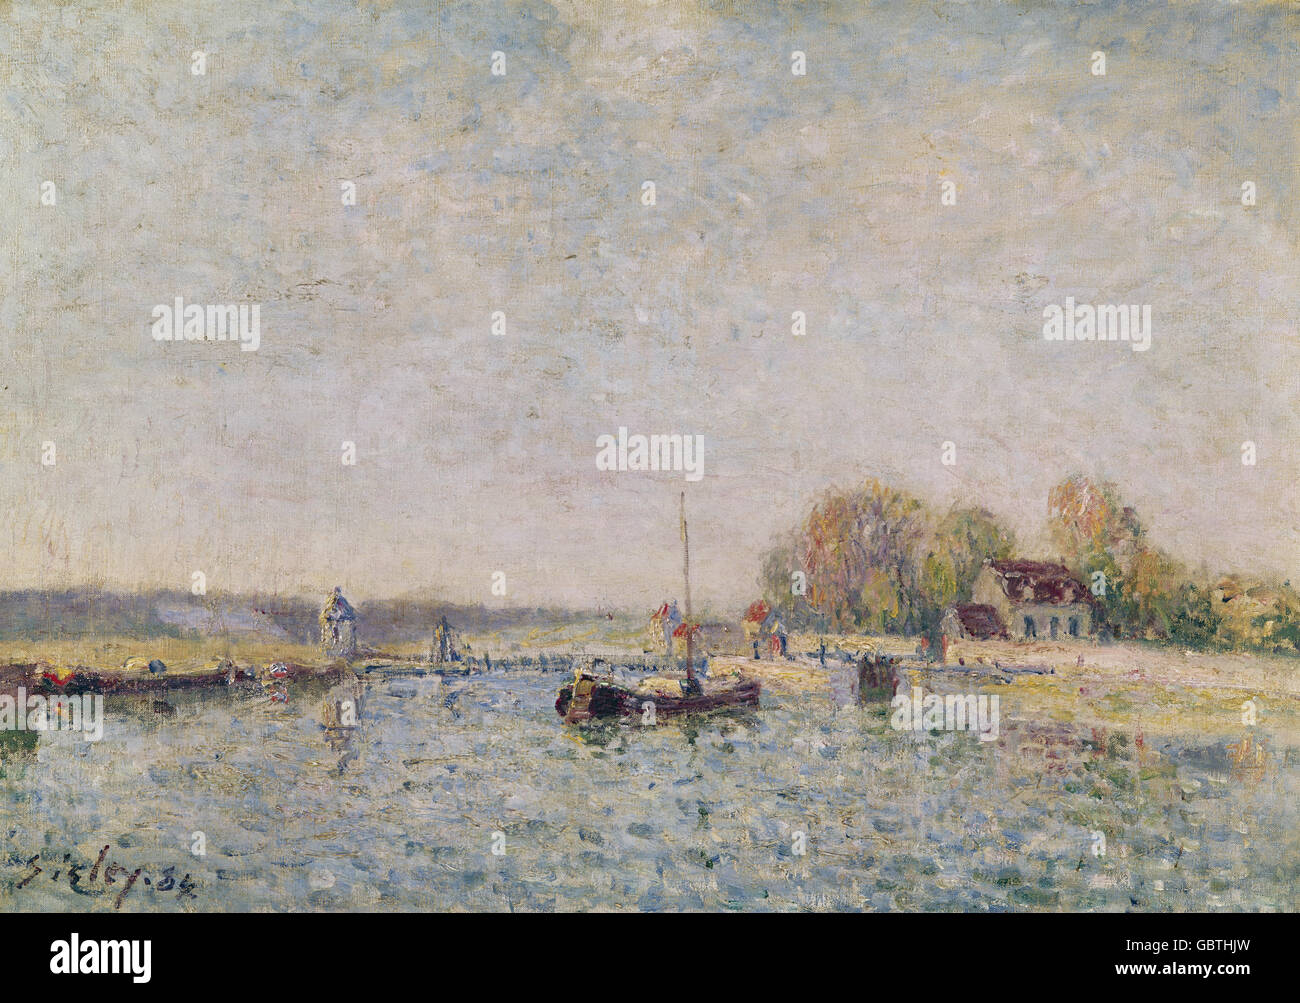 Beaux-arts, Sisley, Alfred, (1839 - 1899), peinture, 'Canal', 1887, huile sur toile, von der Heydt Museum, Wuppertal, Allemagne, Banque D'Images